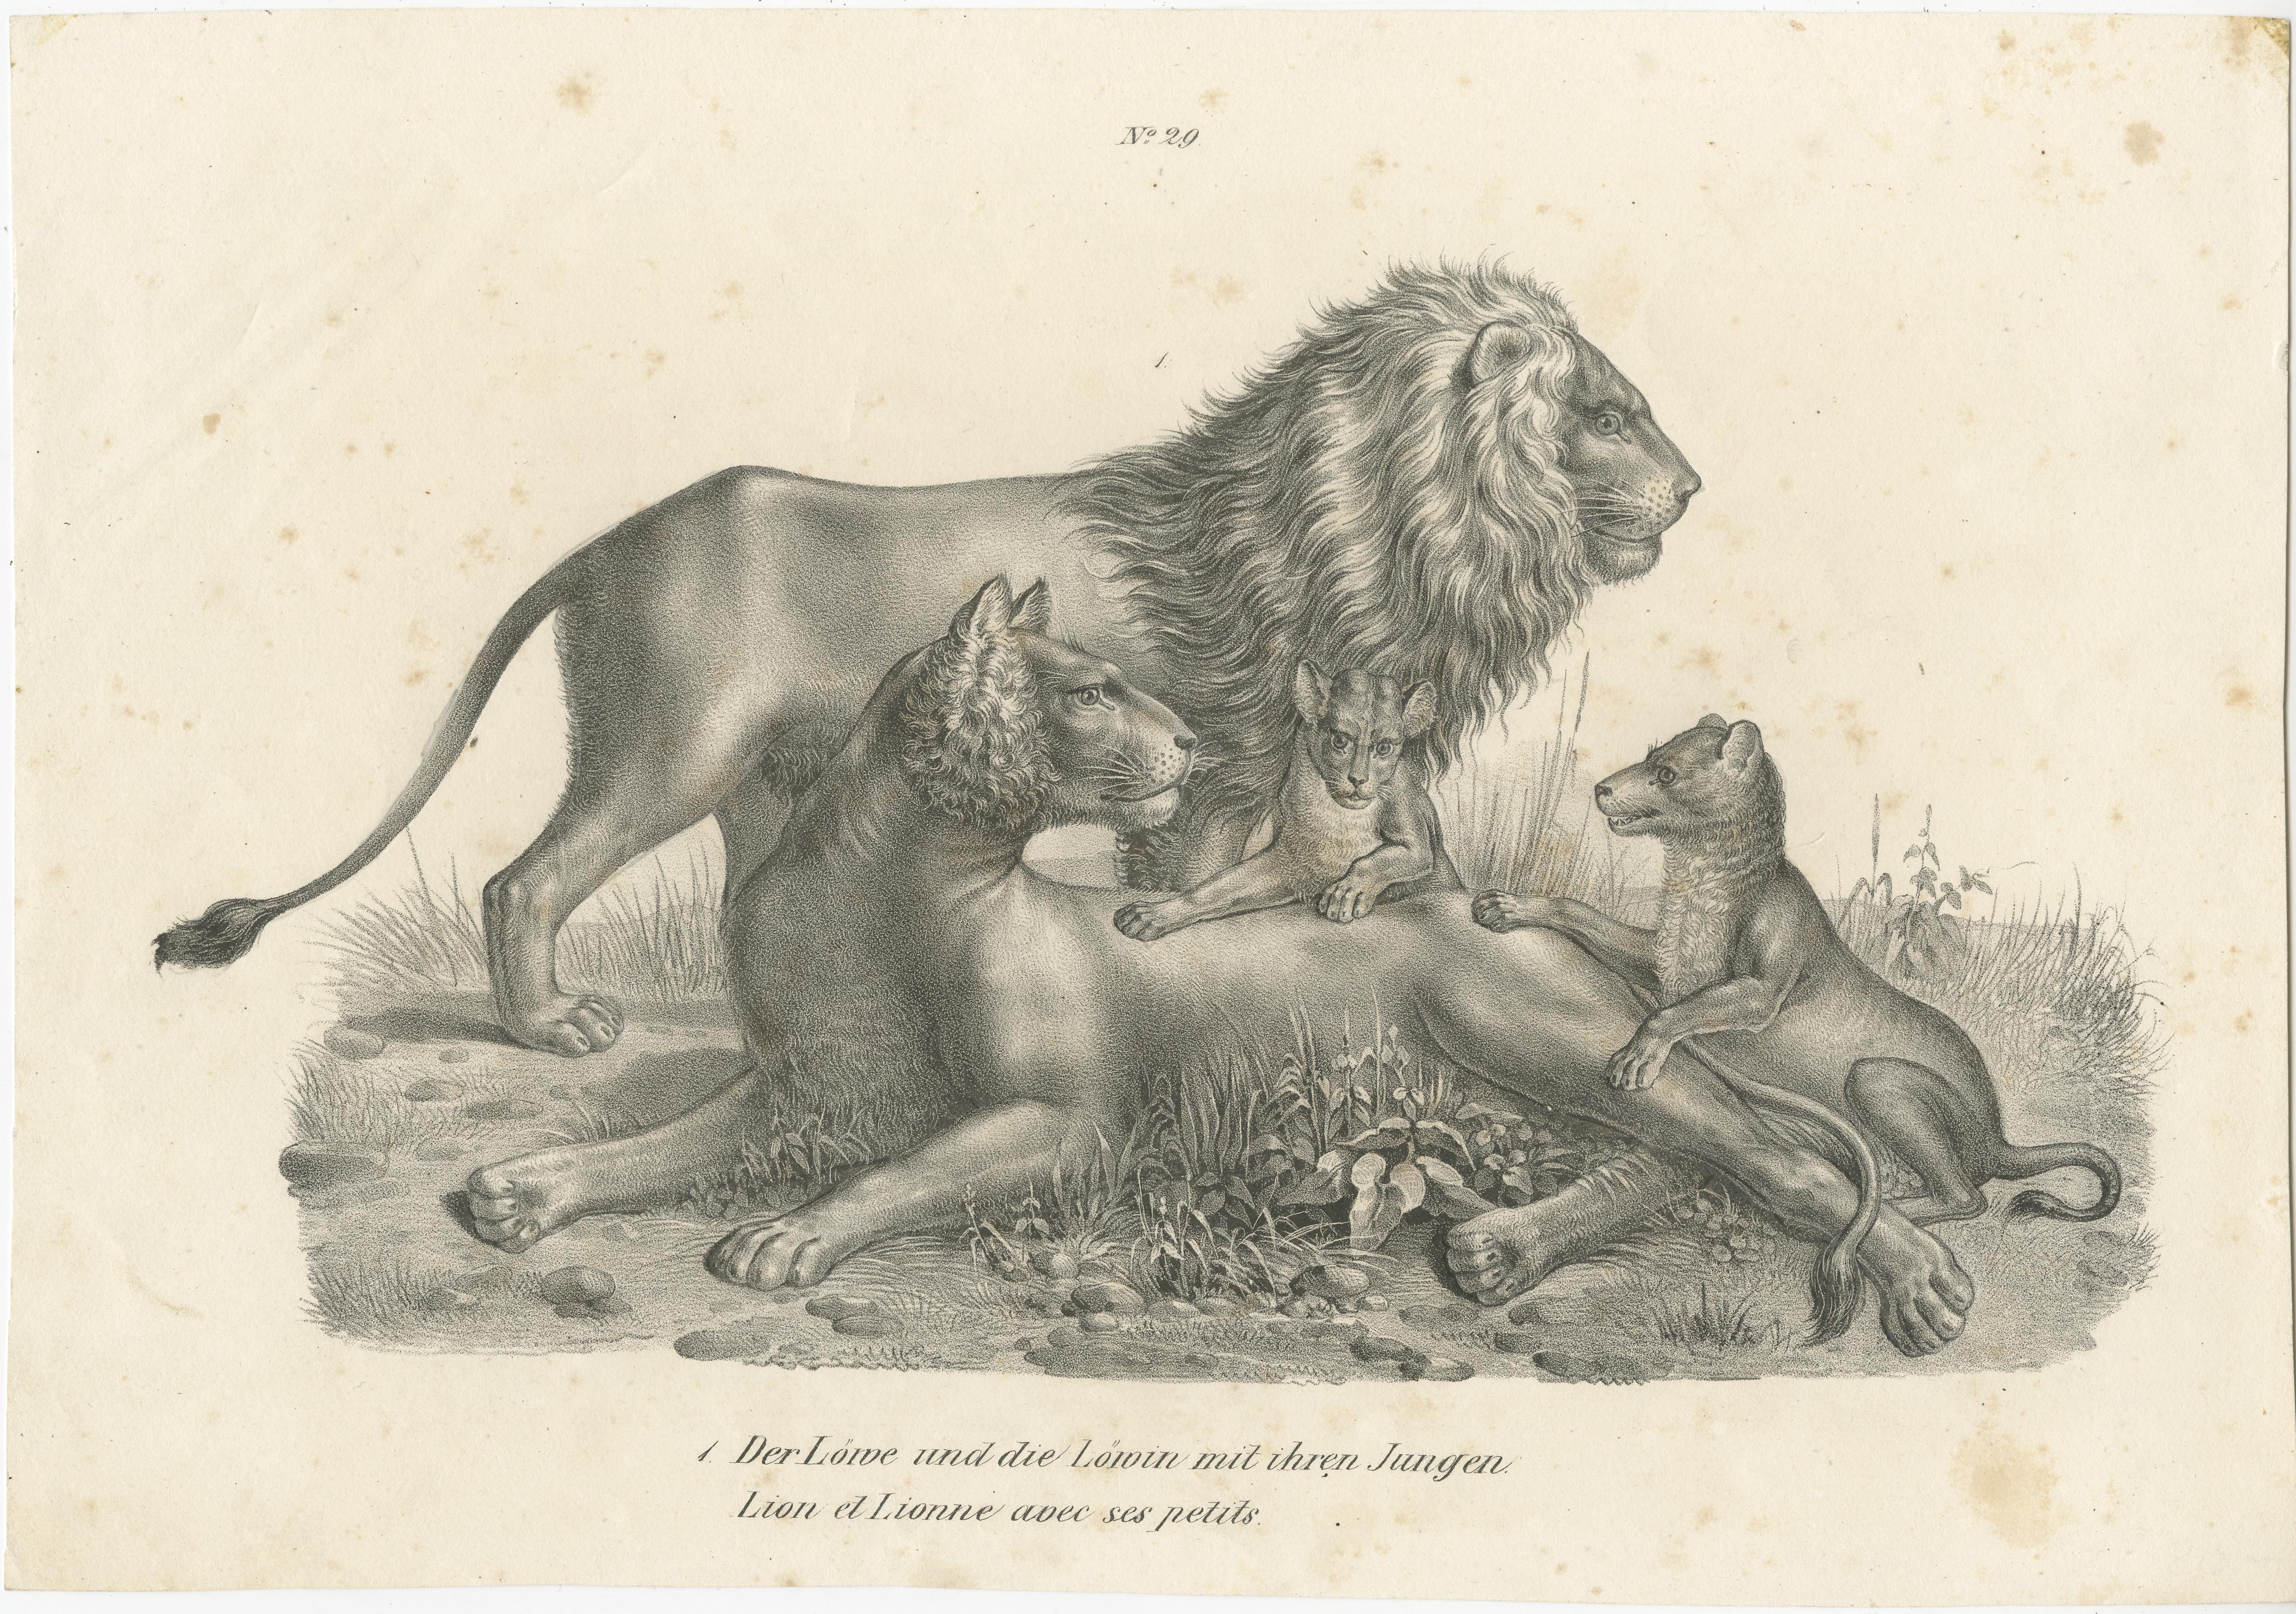 Original antique print titled 'Der Löwe und die Löwin mit ihren Jungen (..)'. Original antique print of a lion, lioness and lion cubs. Published by Karl Joseph Brodtmann, circa 1830.